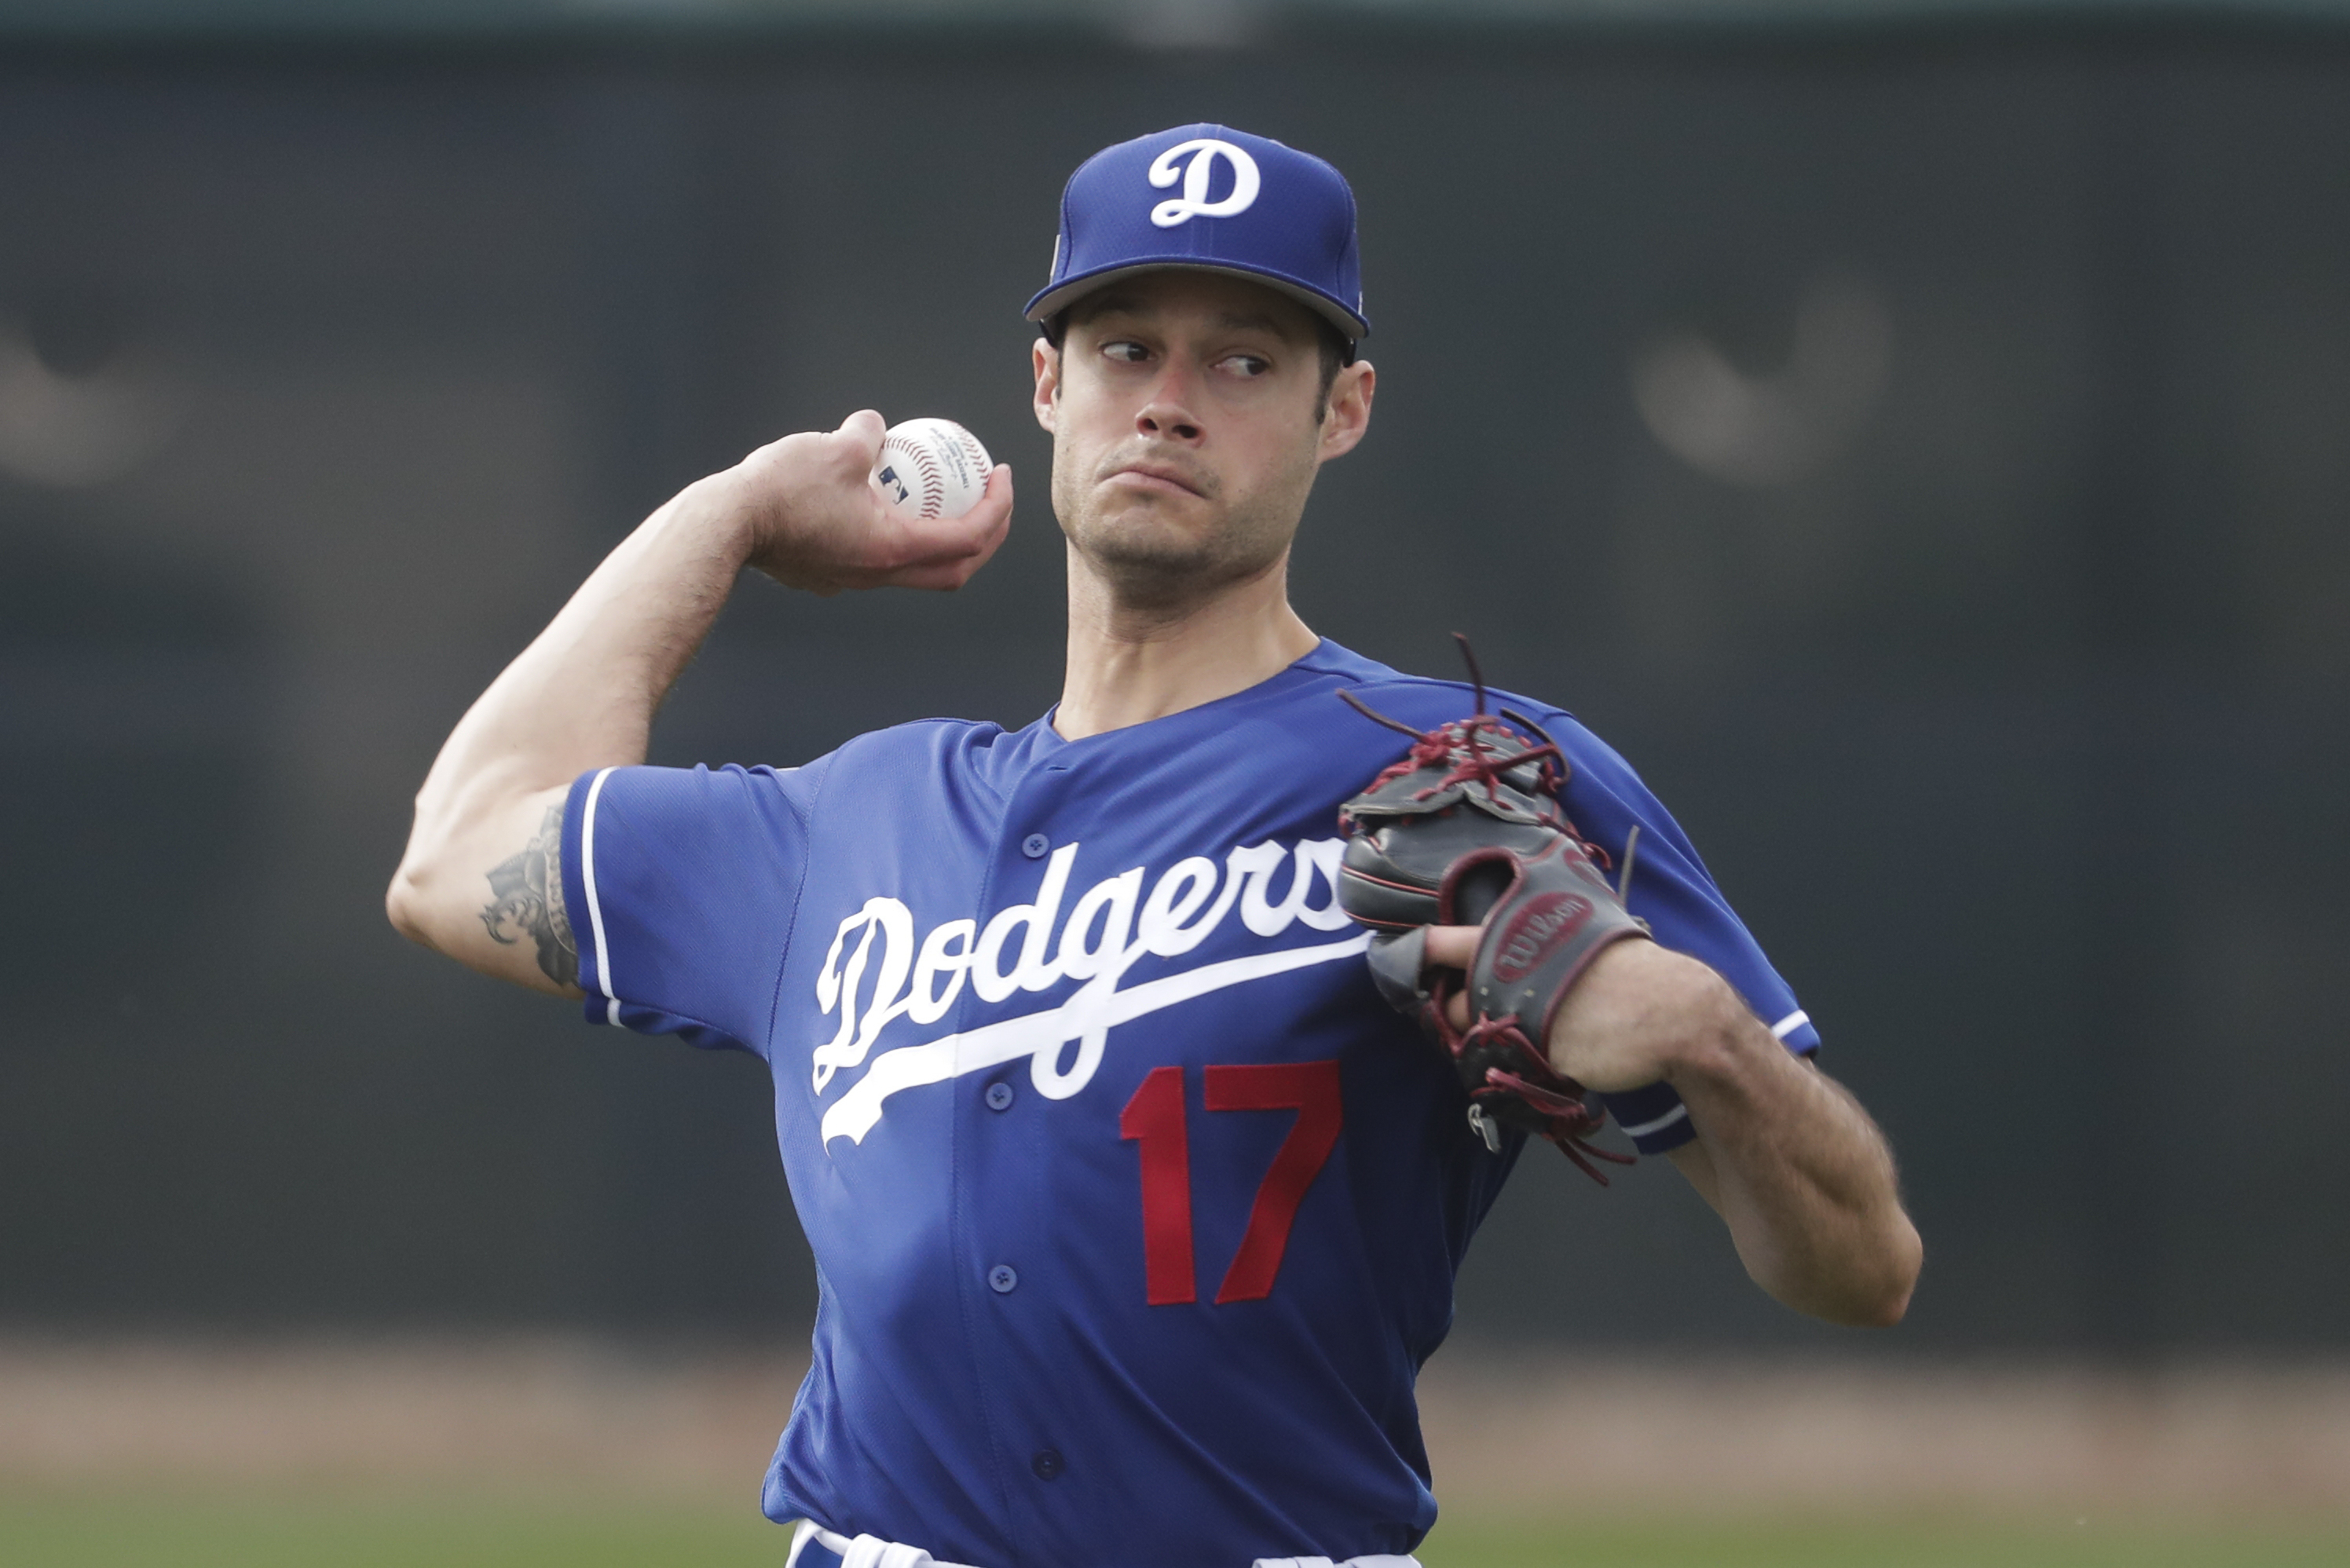 Benches clear as Dodgers' Joe Kelly throws behind Astros' Alex Bregman,  taunts Carlos Correa - ESPN